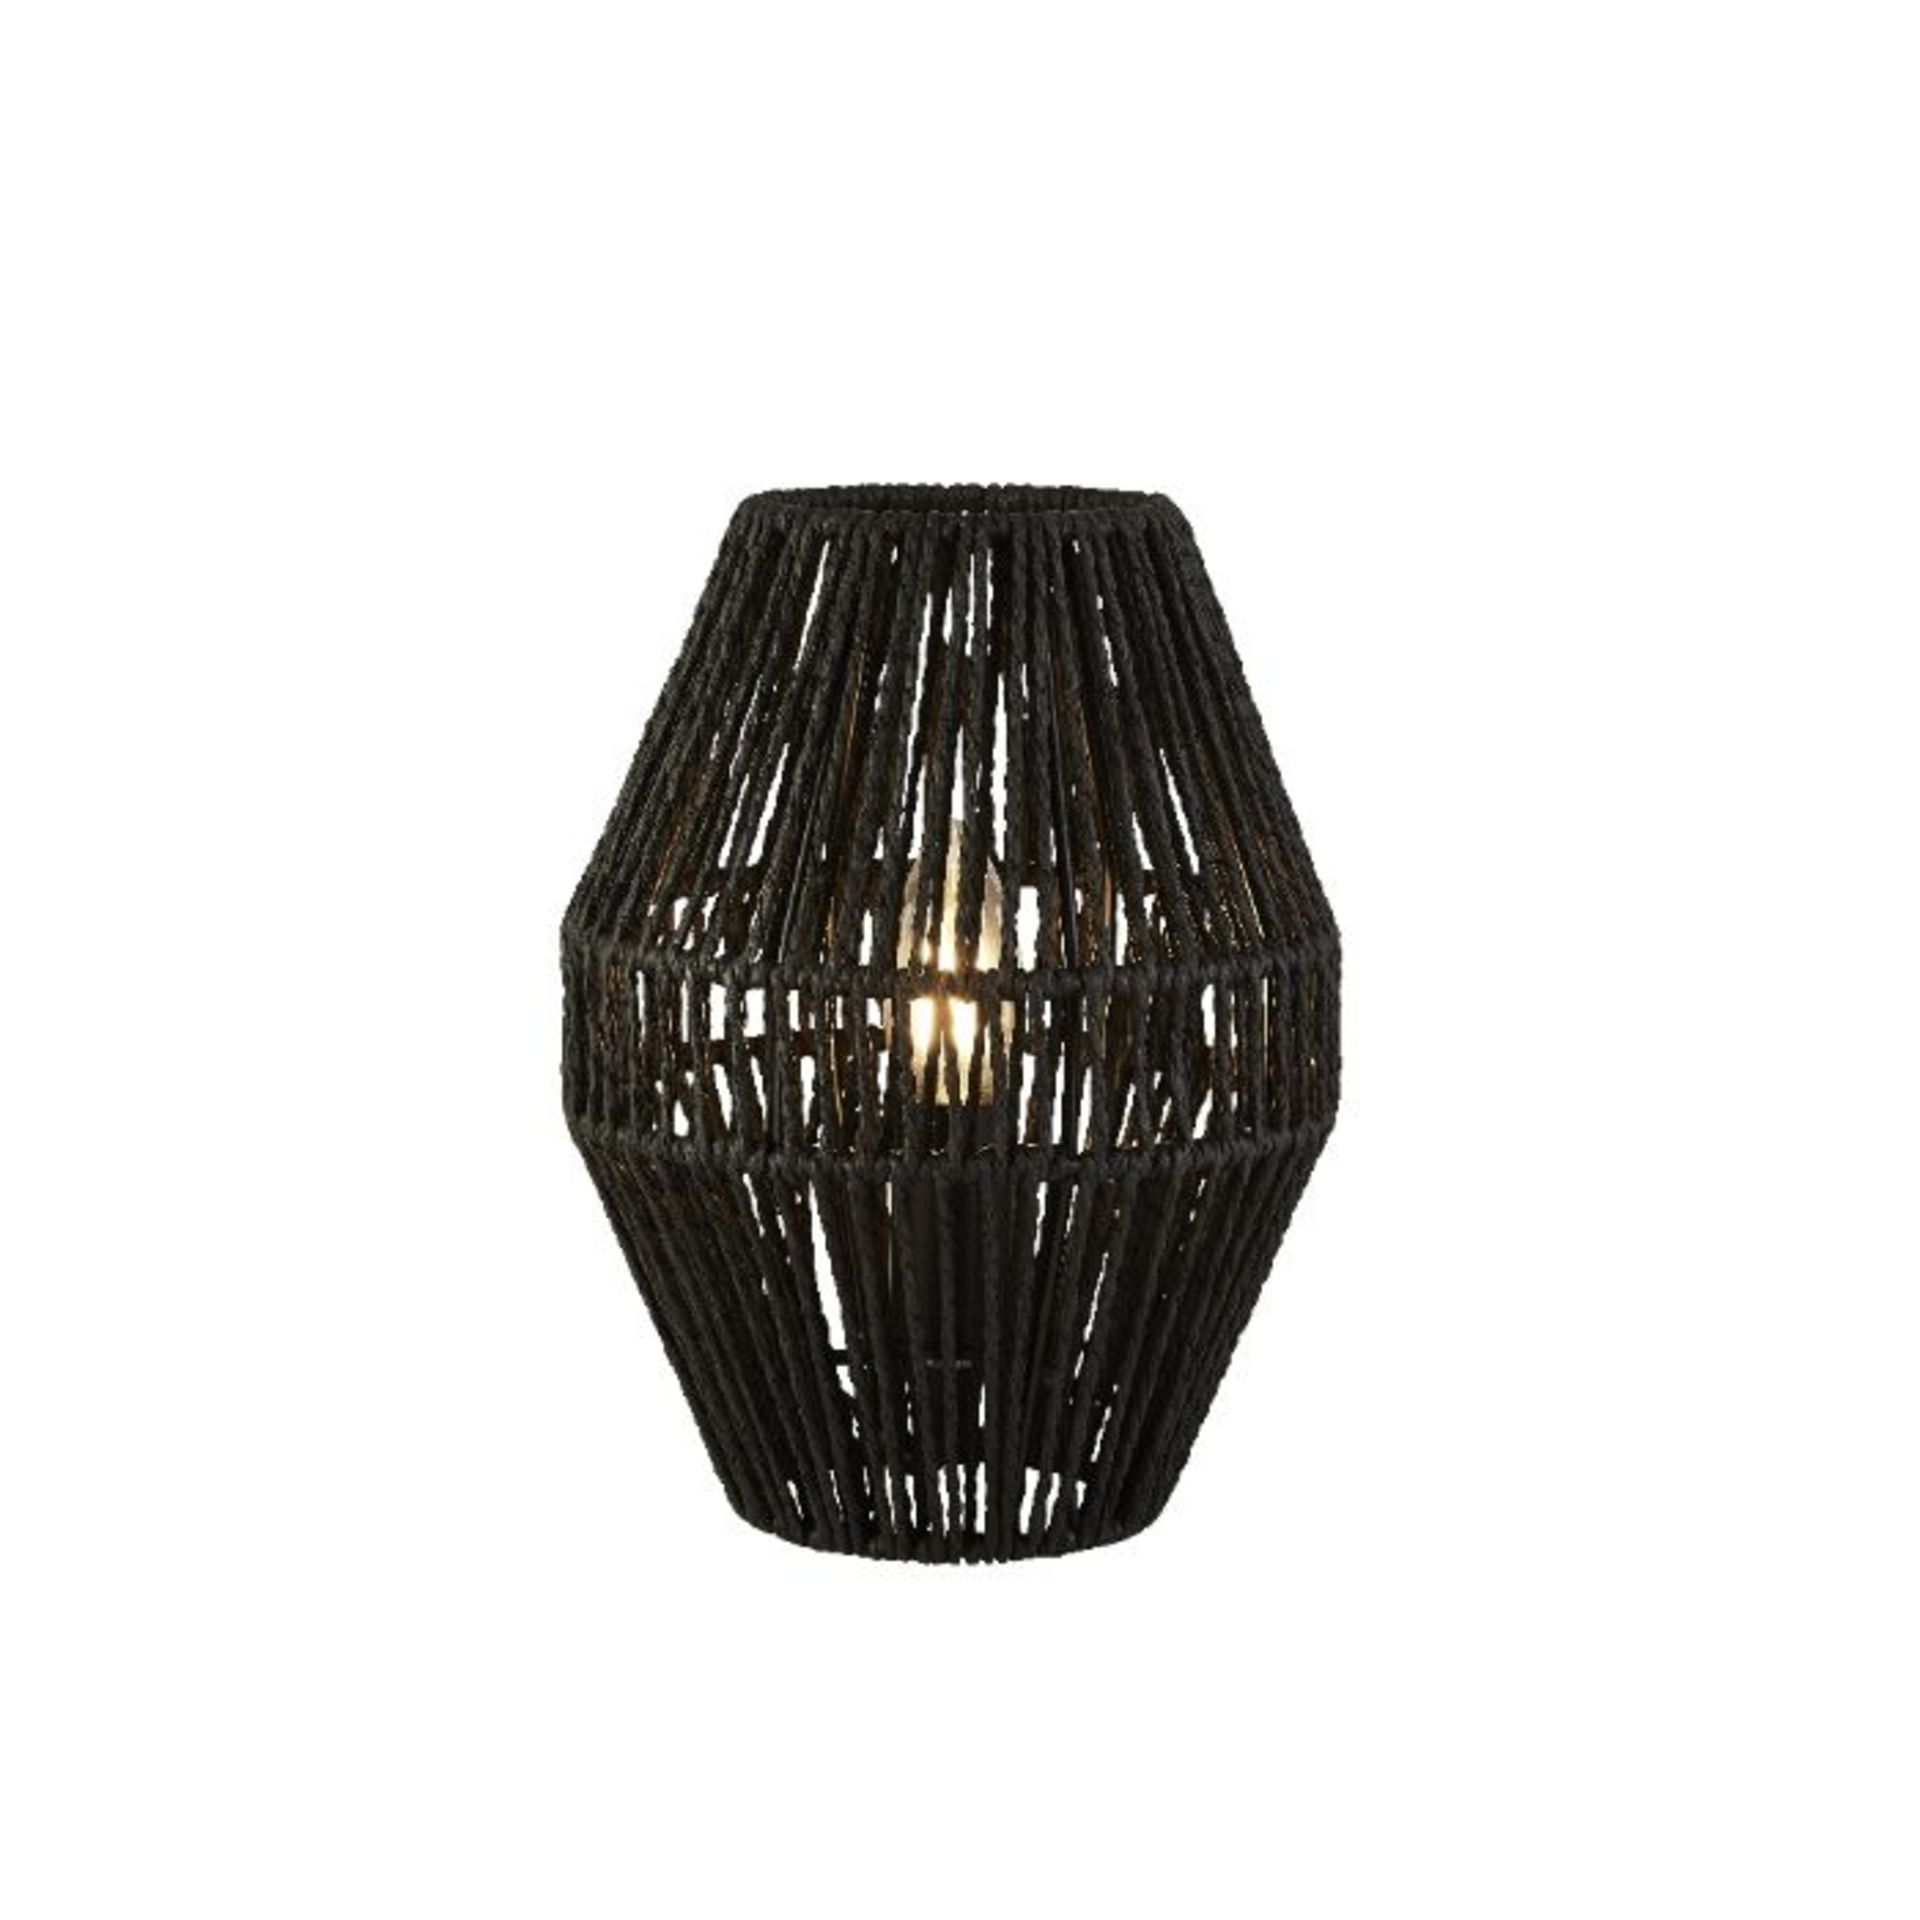 BRAND NEW BLACK RATTAN TABLE LAMP, 28.5CM HIGH, 7w - Black rattan table lamp. 28.5cm high, 21cm